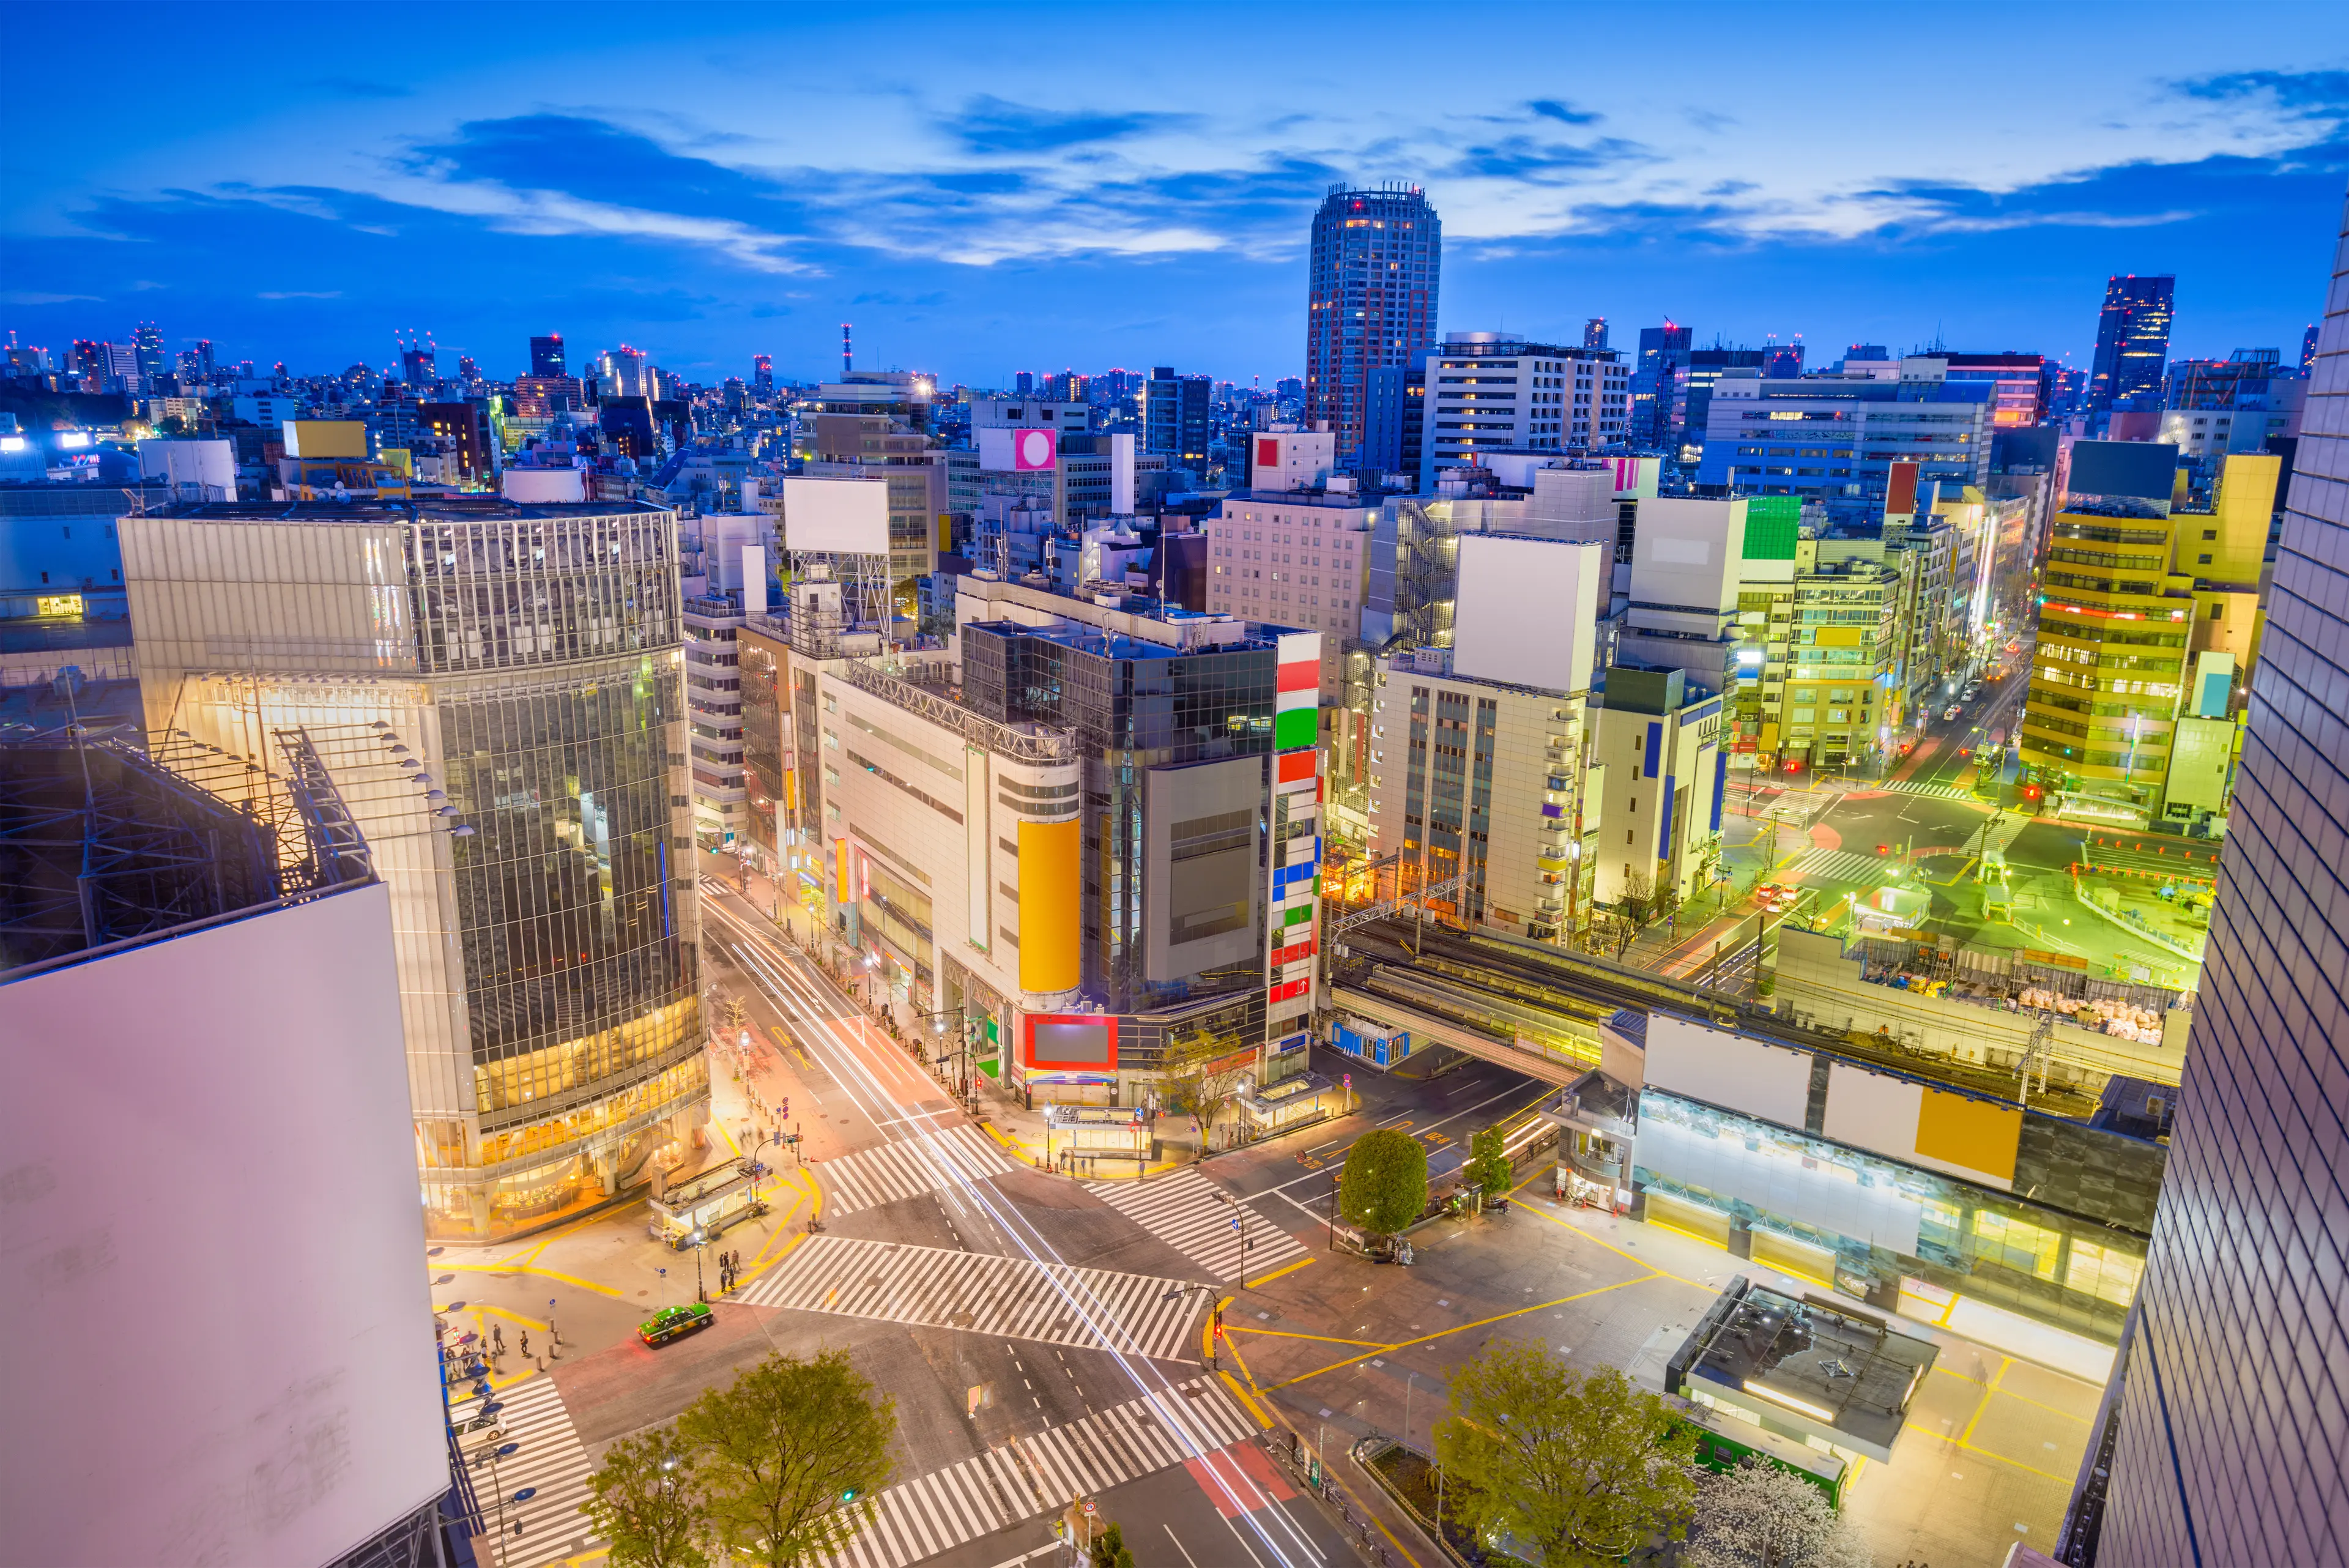 City skyline over Shibuya Ward